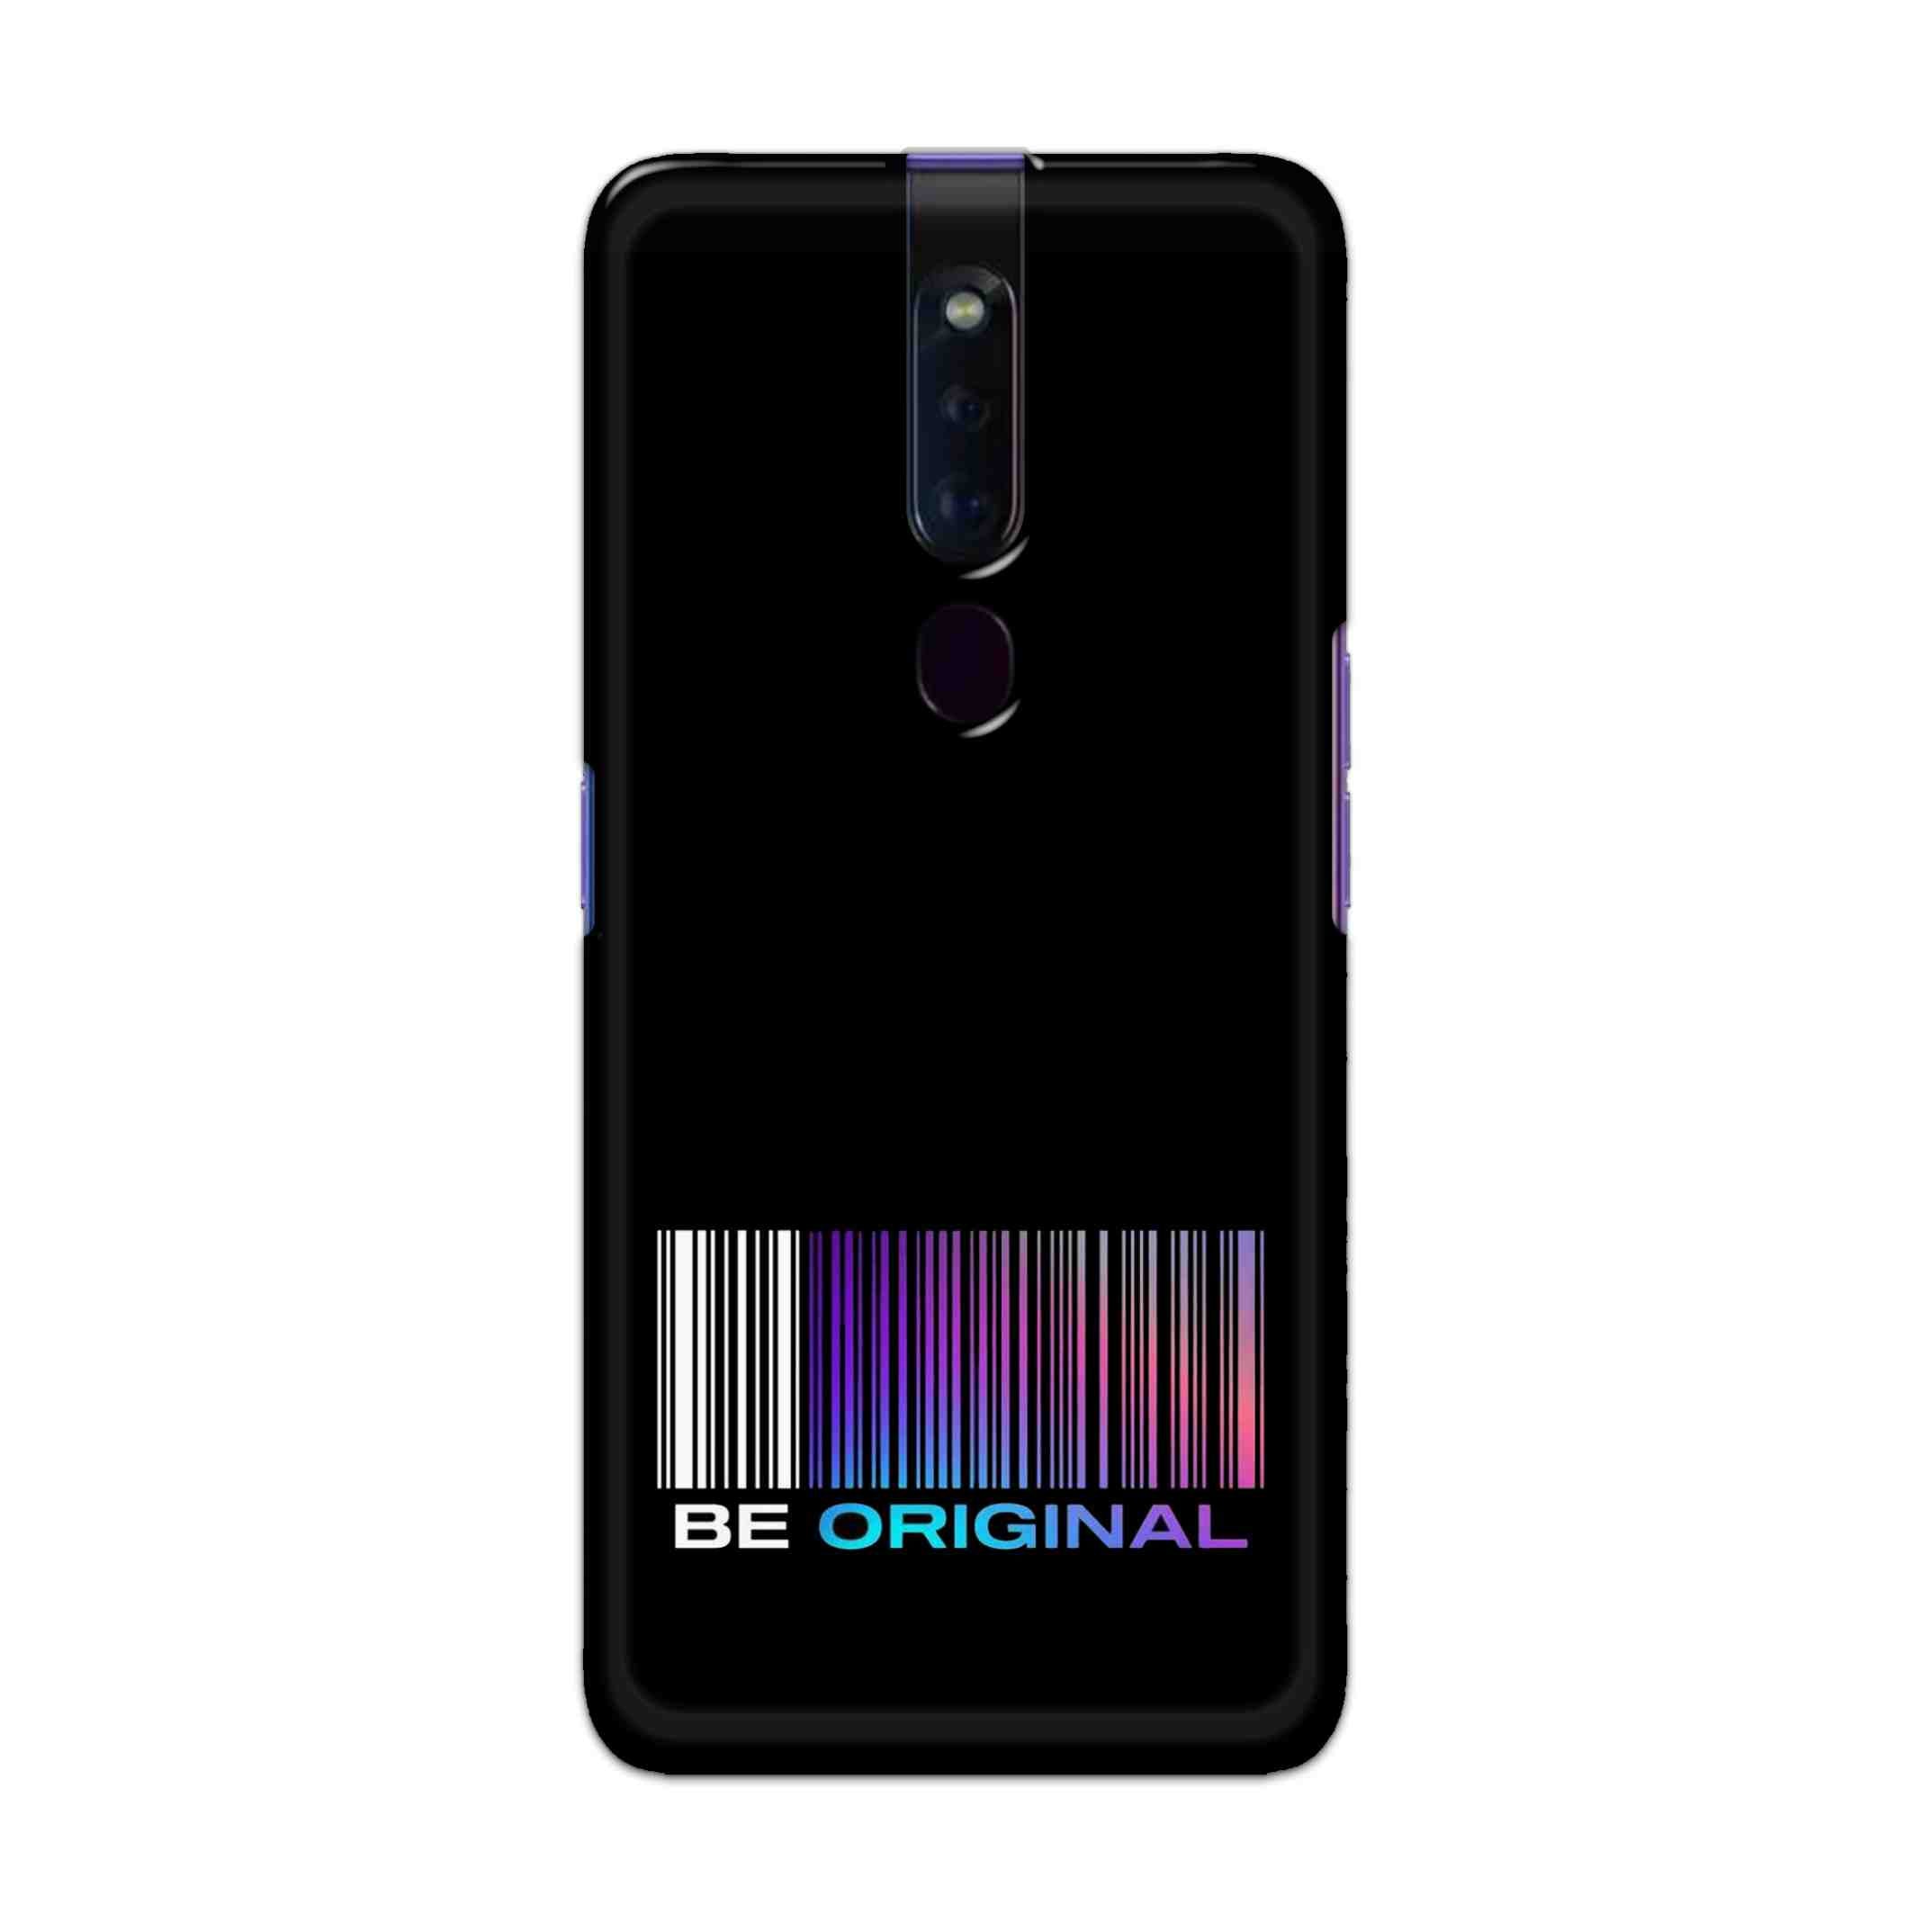 Buy Be Original Hard Back Mobile Phone Case Cover For Oppo F11 Pro Online